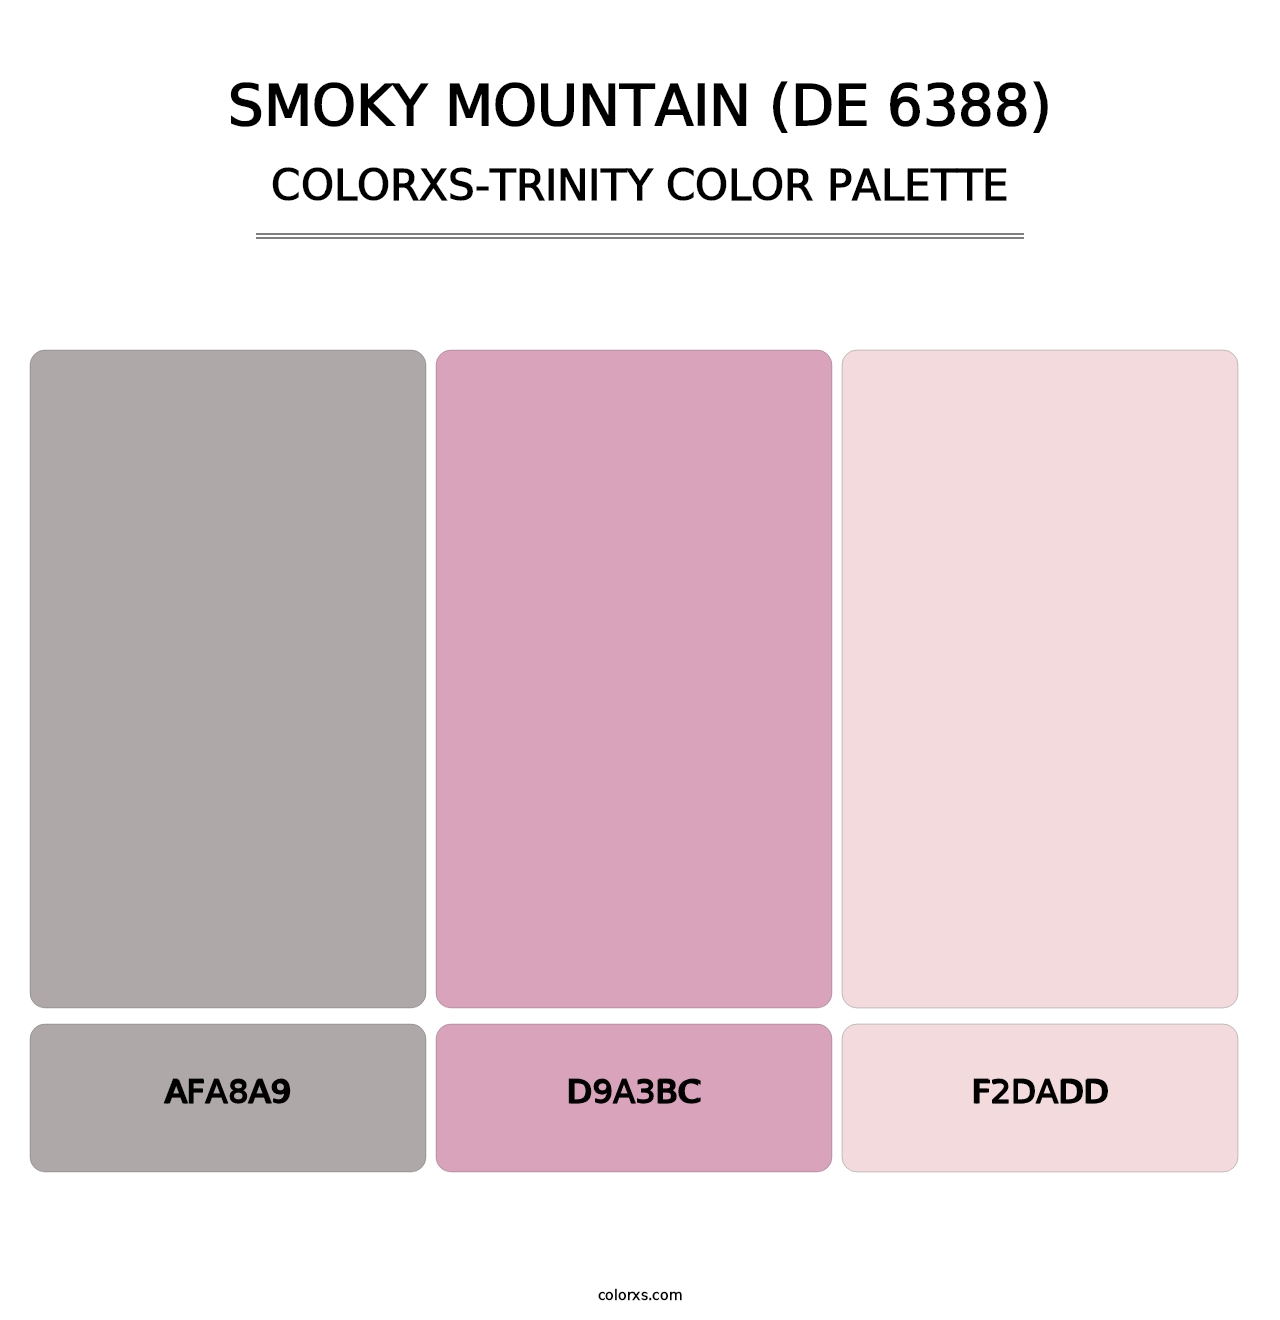 Smoky Mountain (DE 6388) - Colorxs Trinity Palette